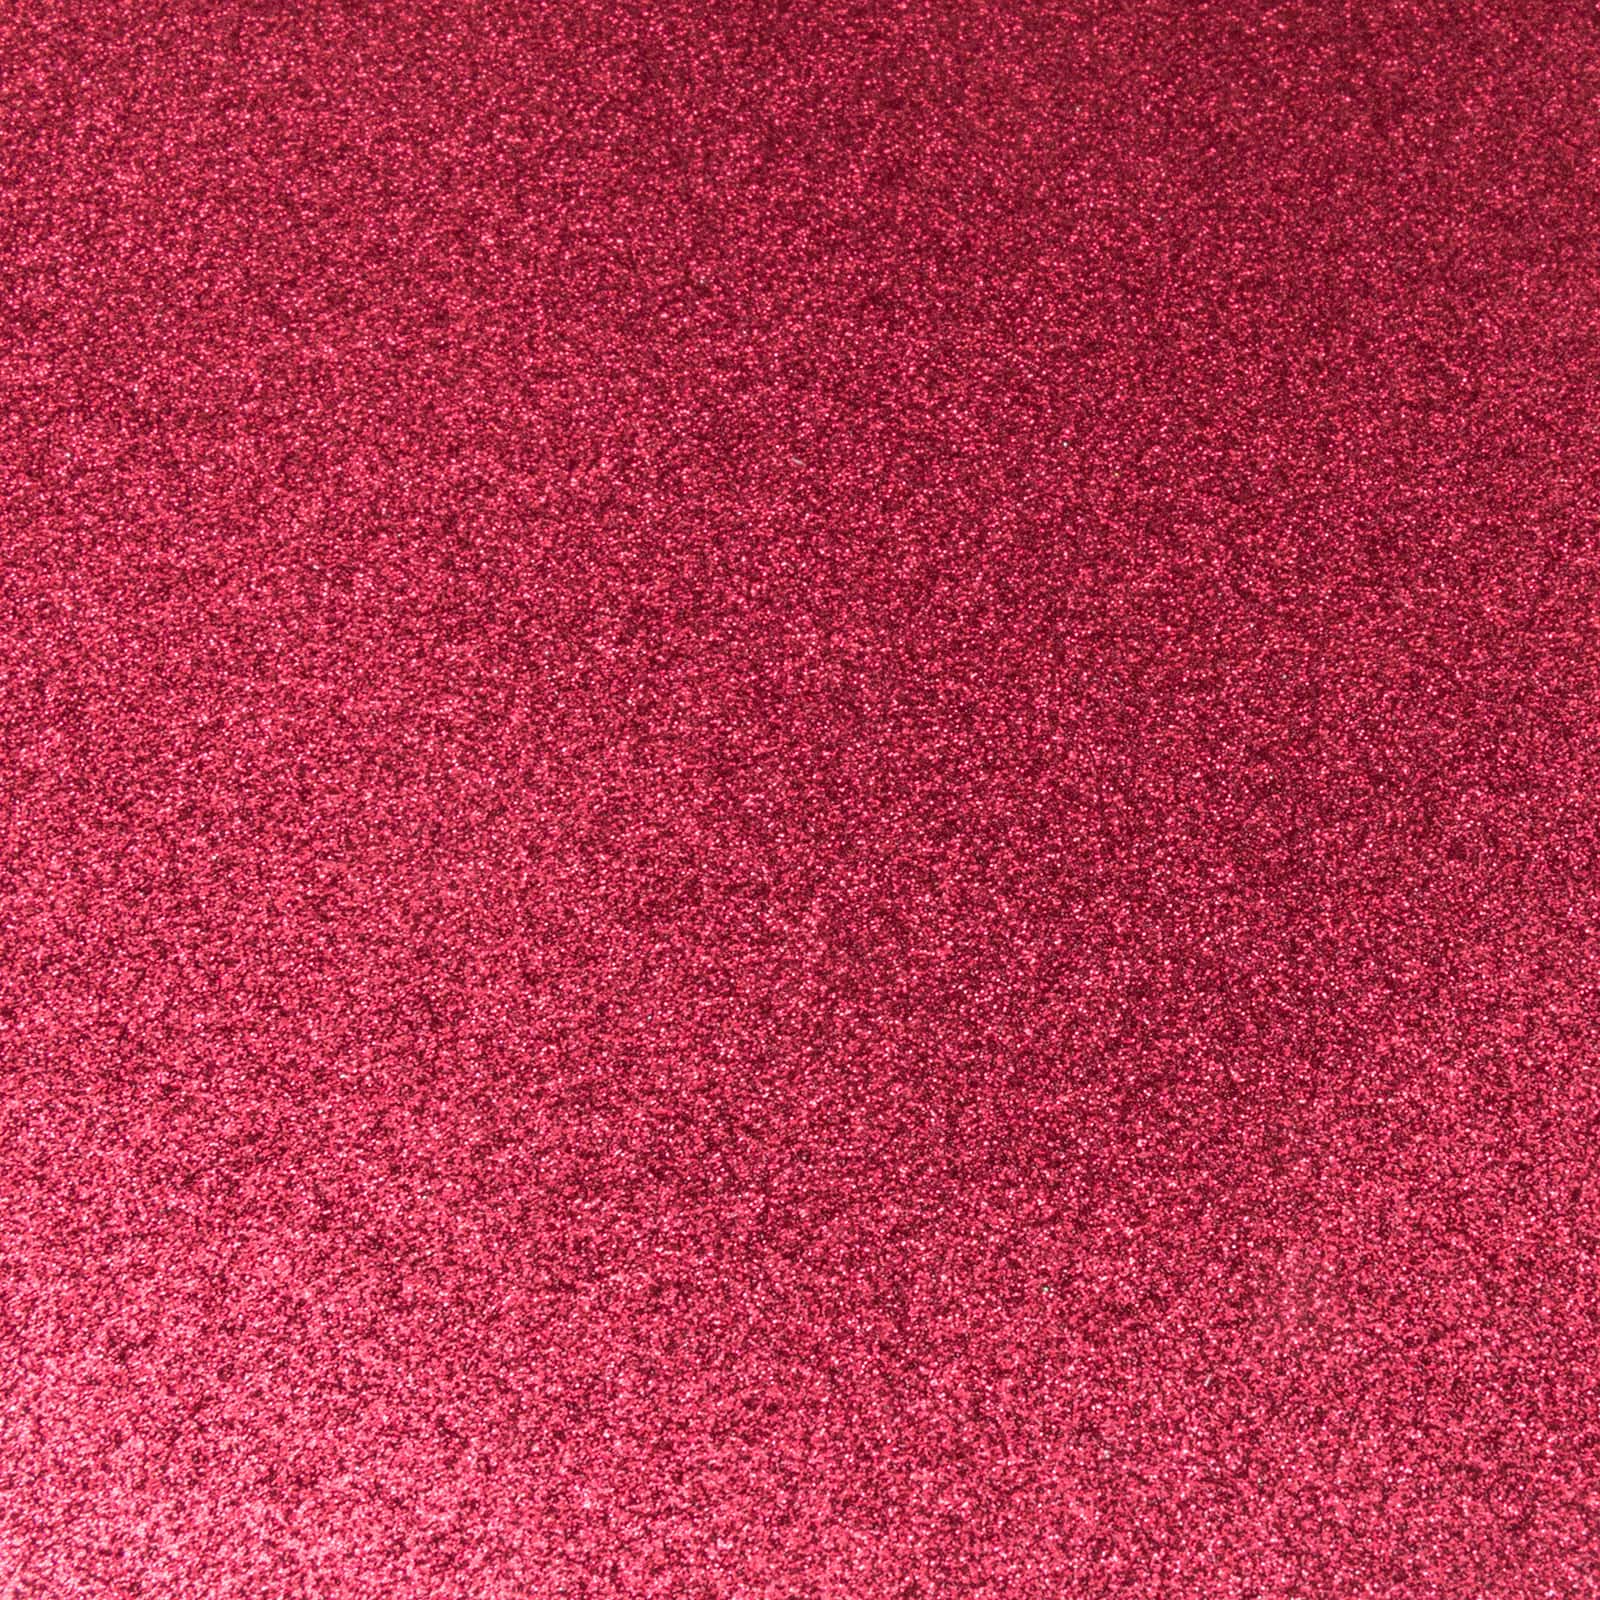 Micro Fine Glitter Paper, Red/Lt. Copper, 5 x 6, 2 Sheets